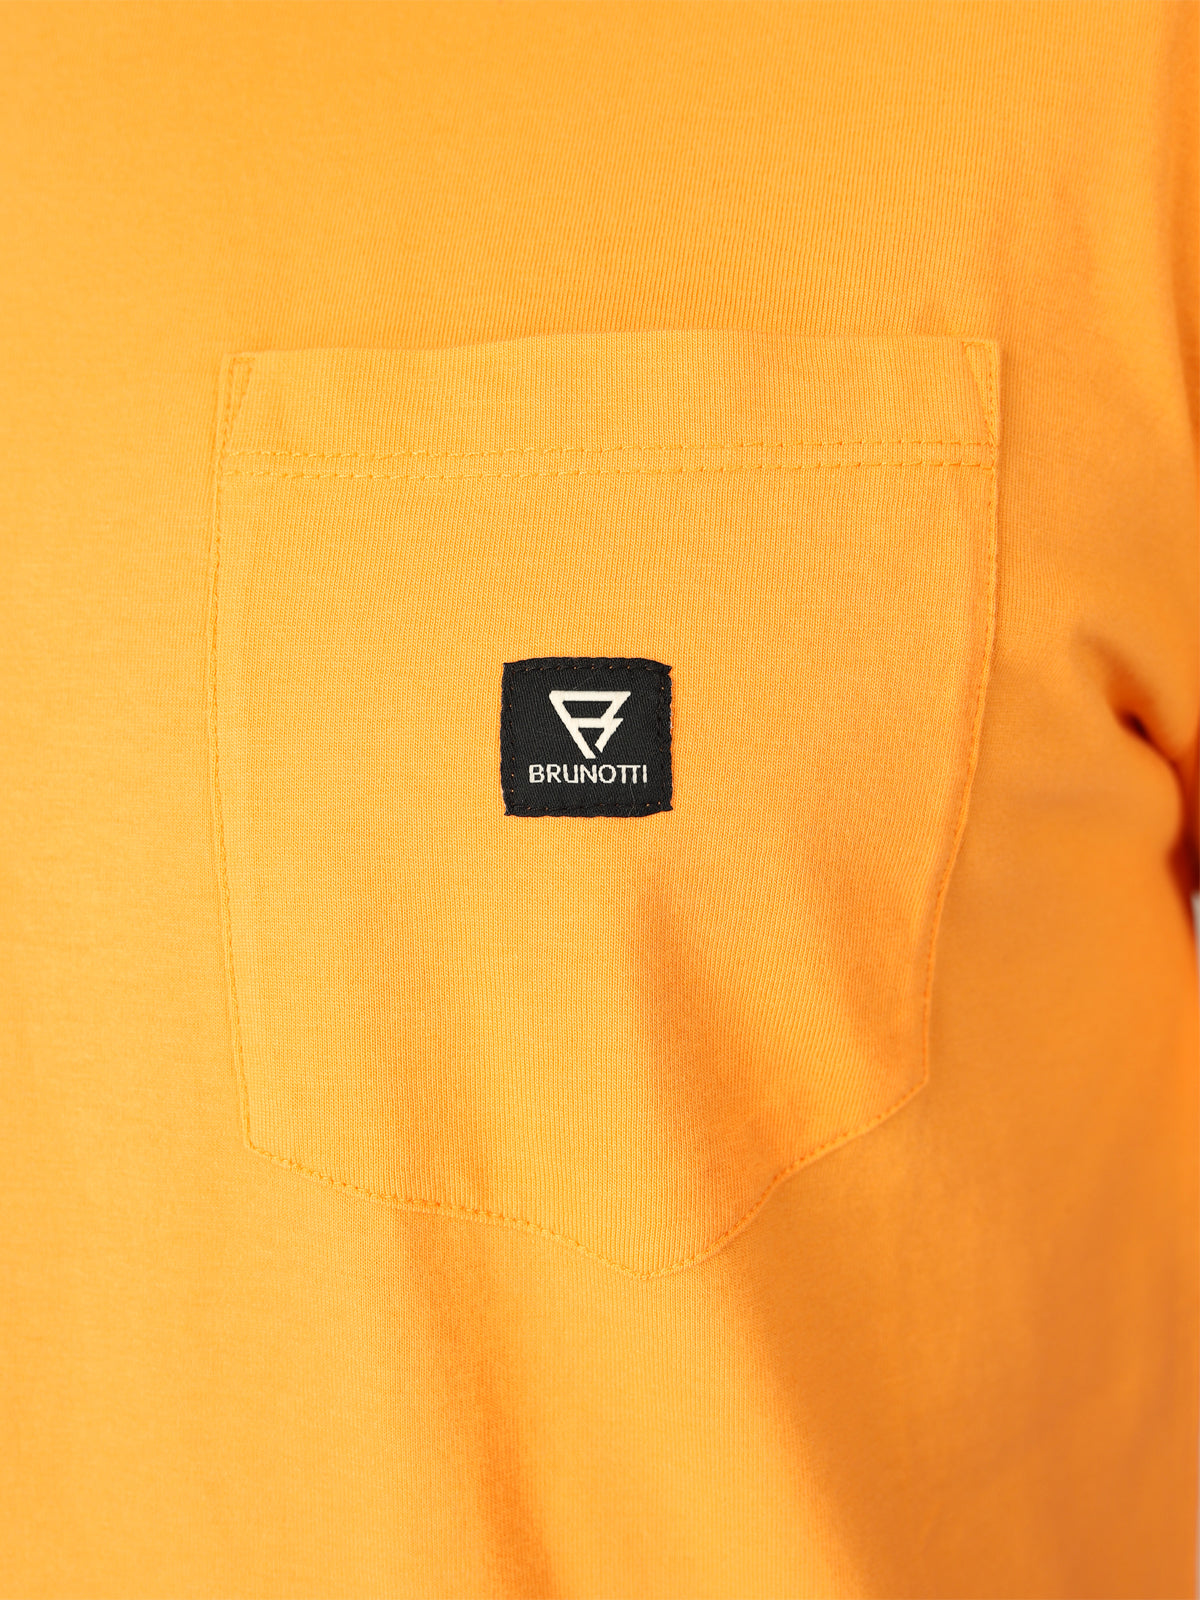 Axle Herren T-Shirt | Orange